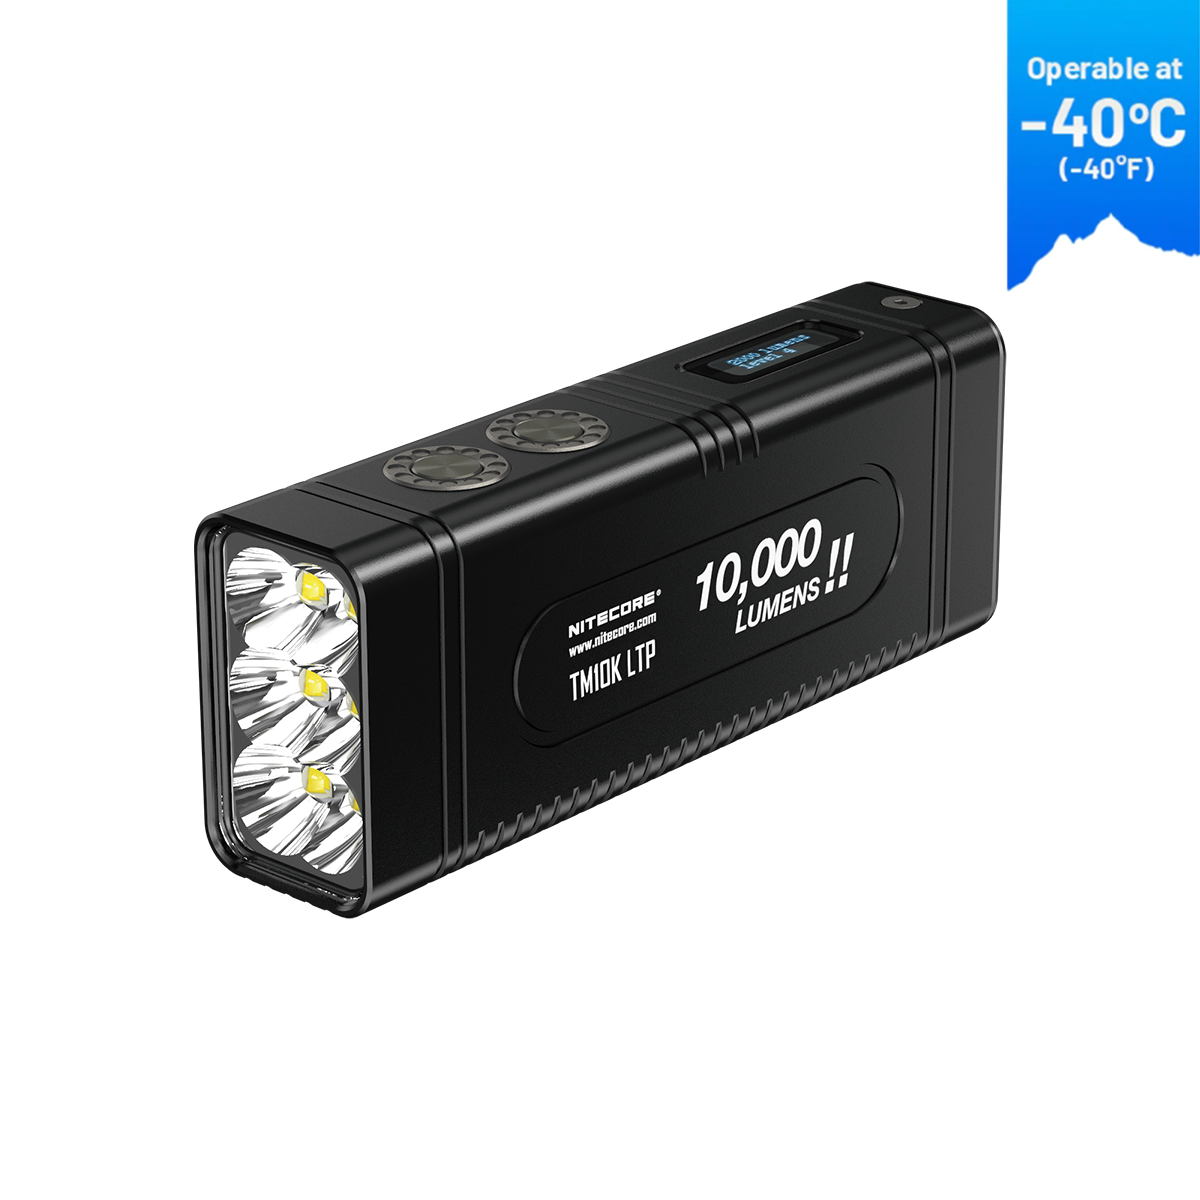 Nitecore TM10K LTP Flashlight 10,000 Lumen Burst Rechargeable Flashlight